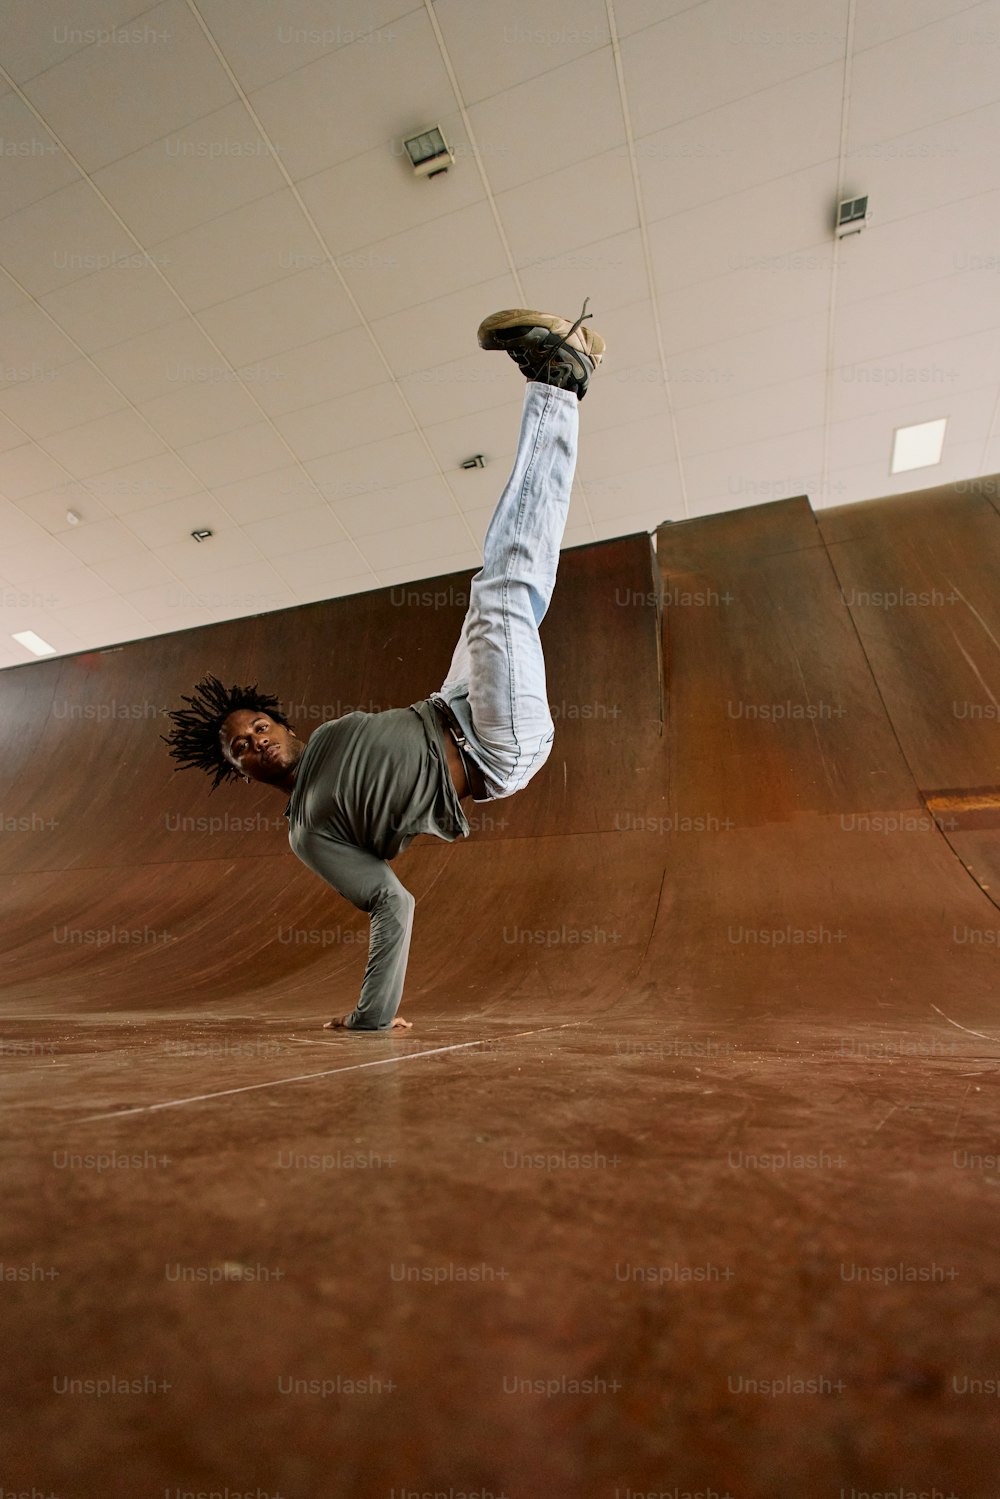 a man doing a trick on a skateboard at a skate park